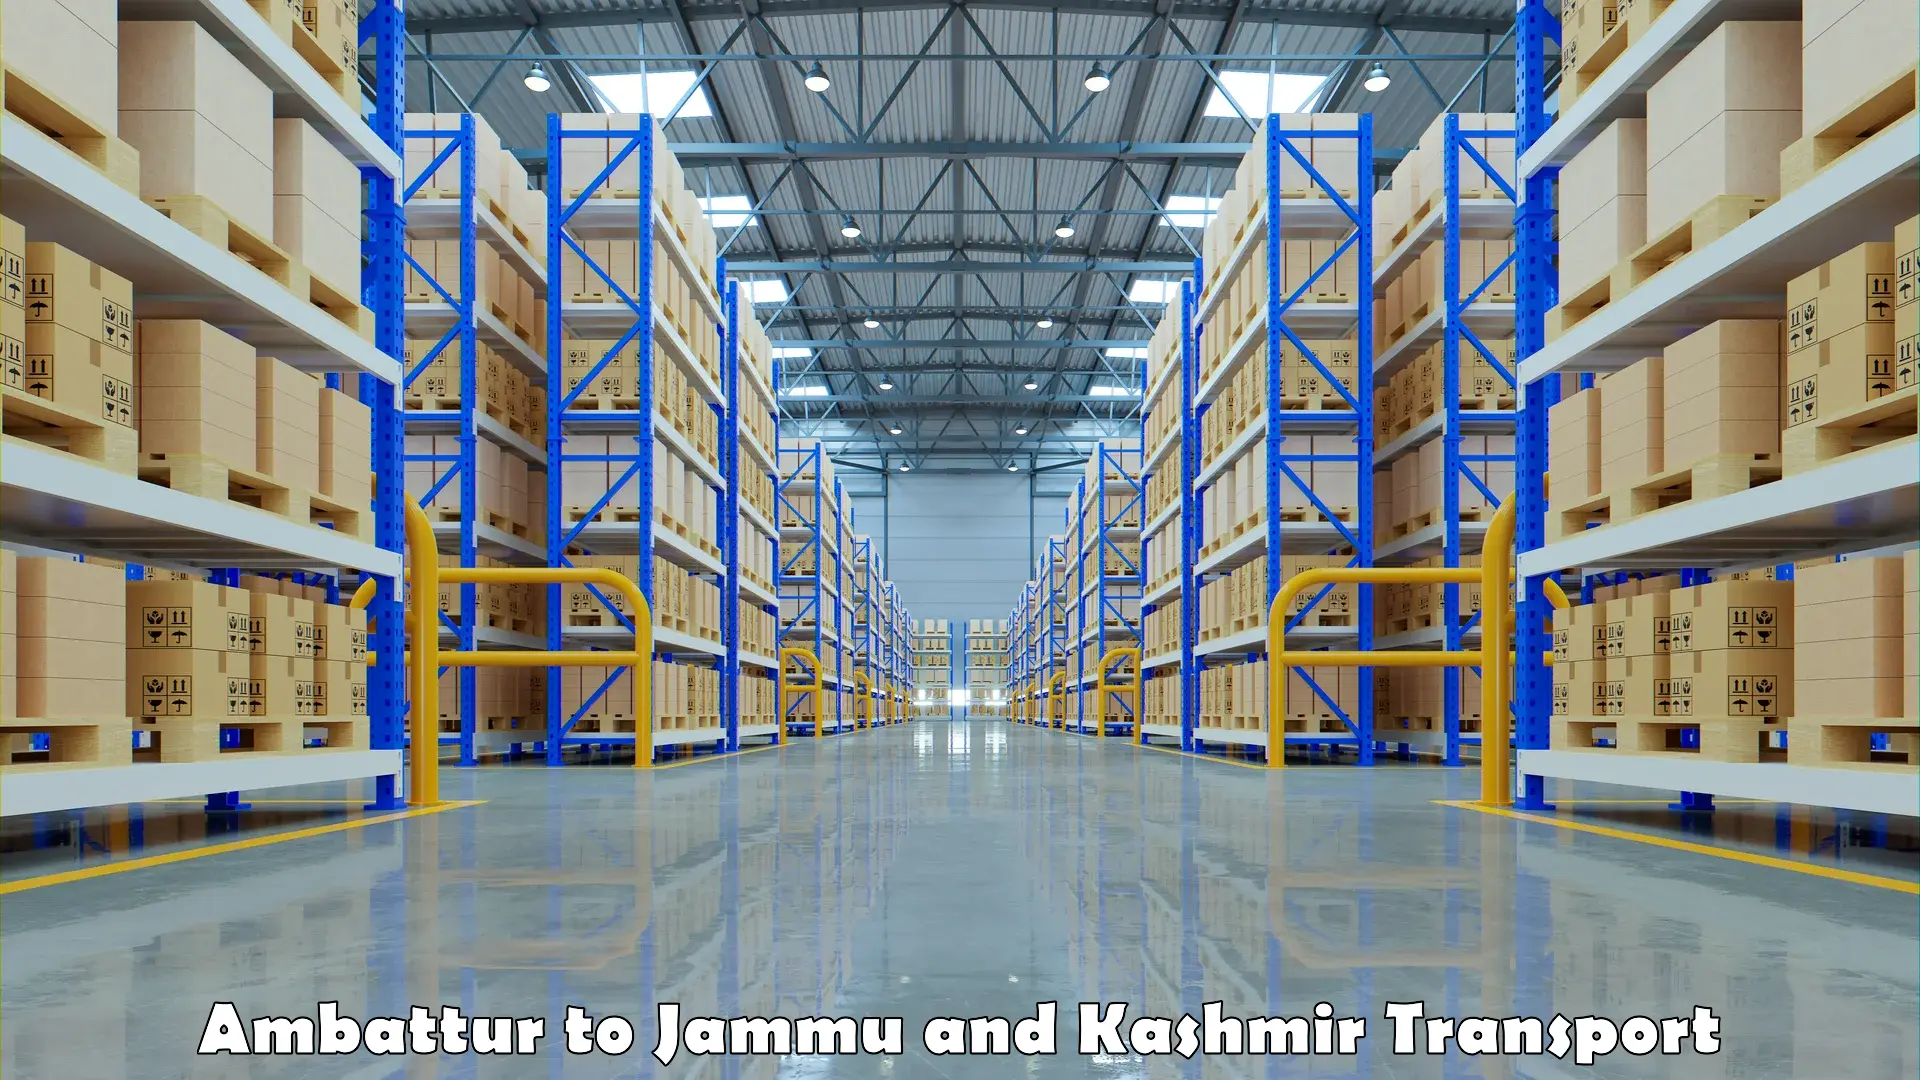 Transport in sharing Ambattur to Jammu and Kashmir